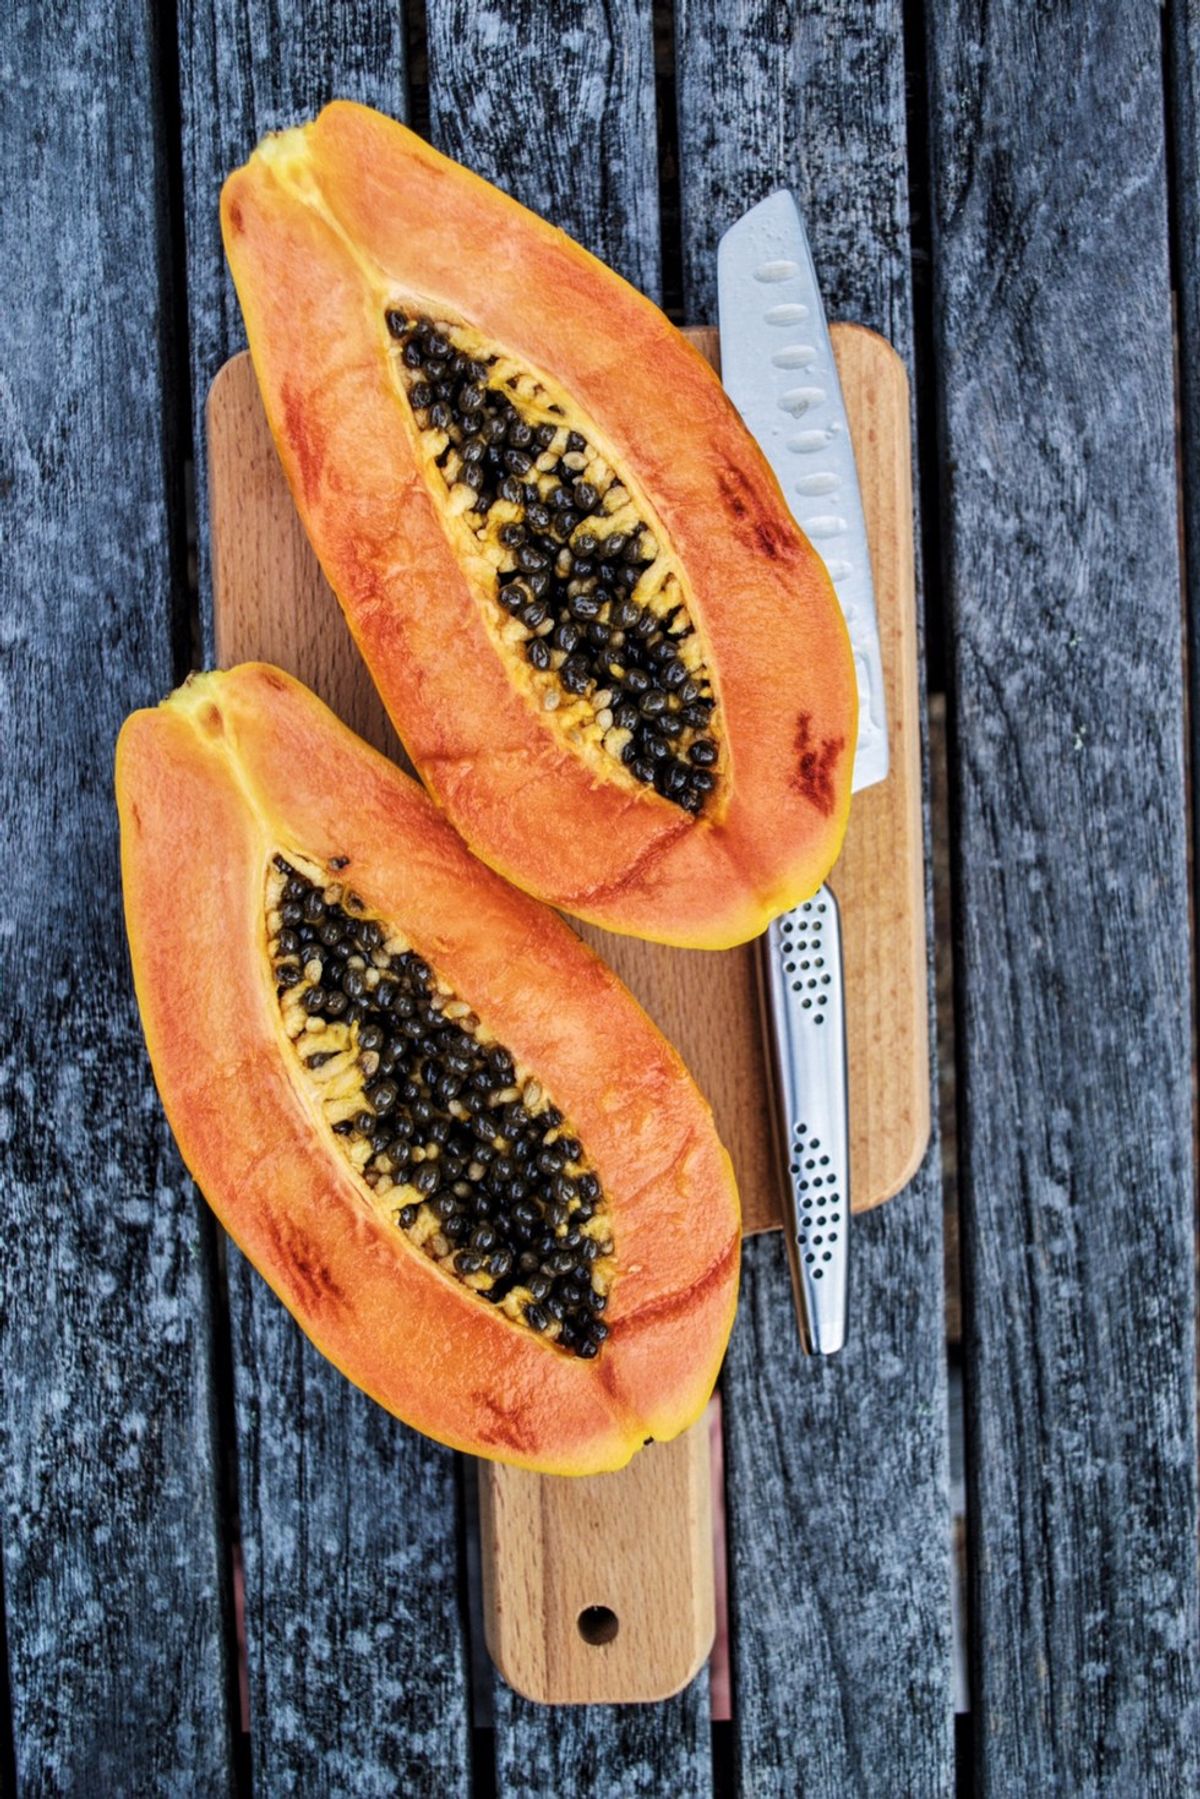 Why Papayas Are A Healthy Food Choice